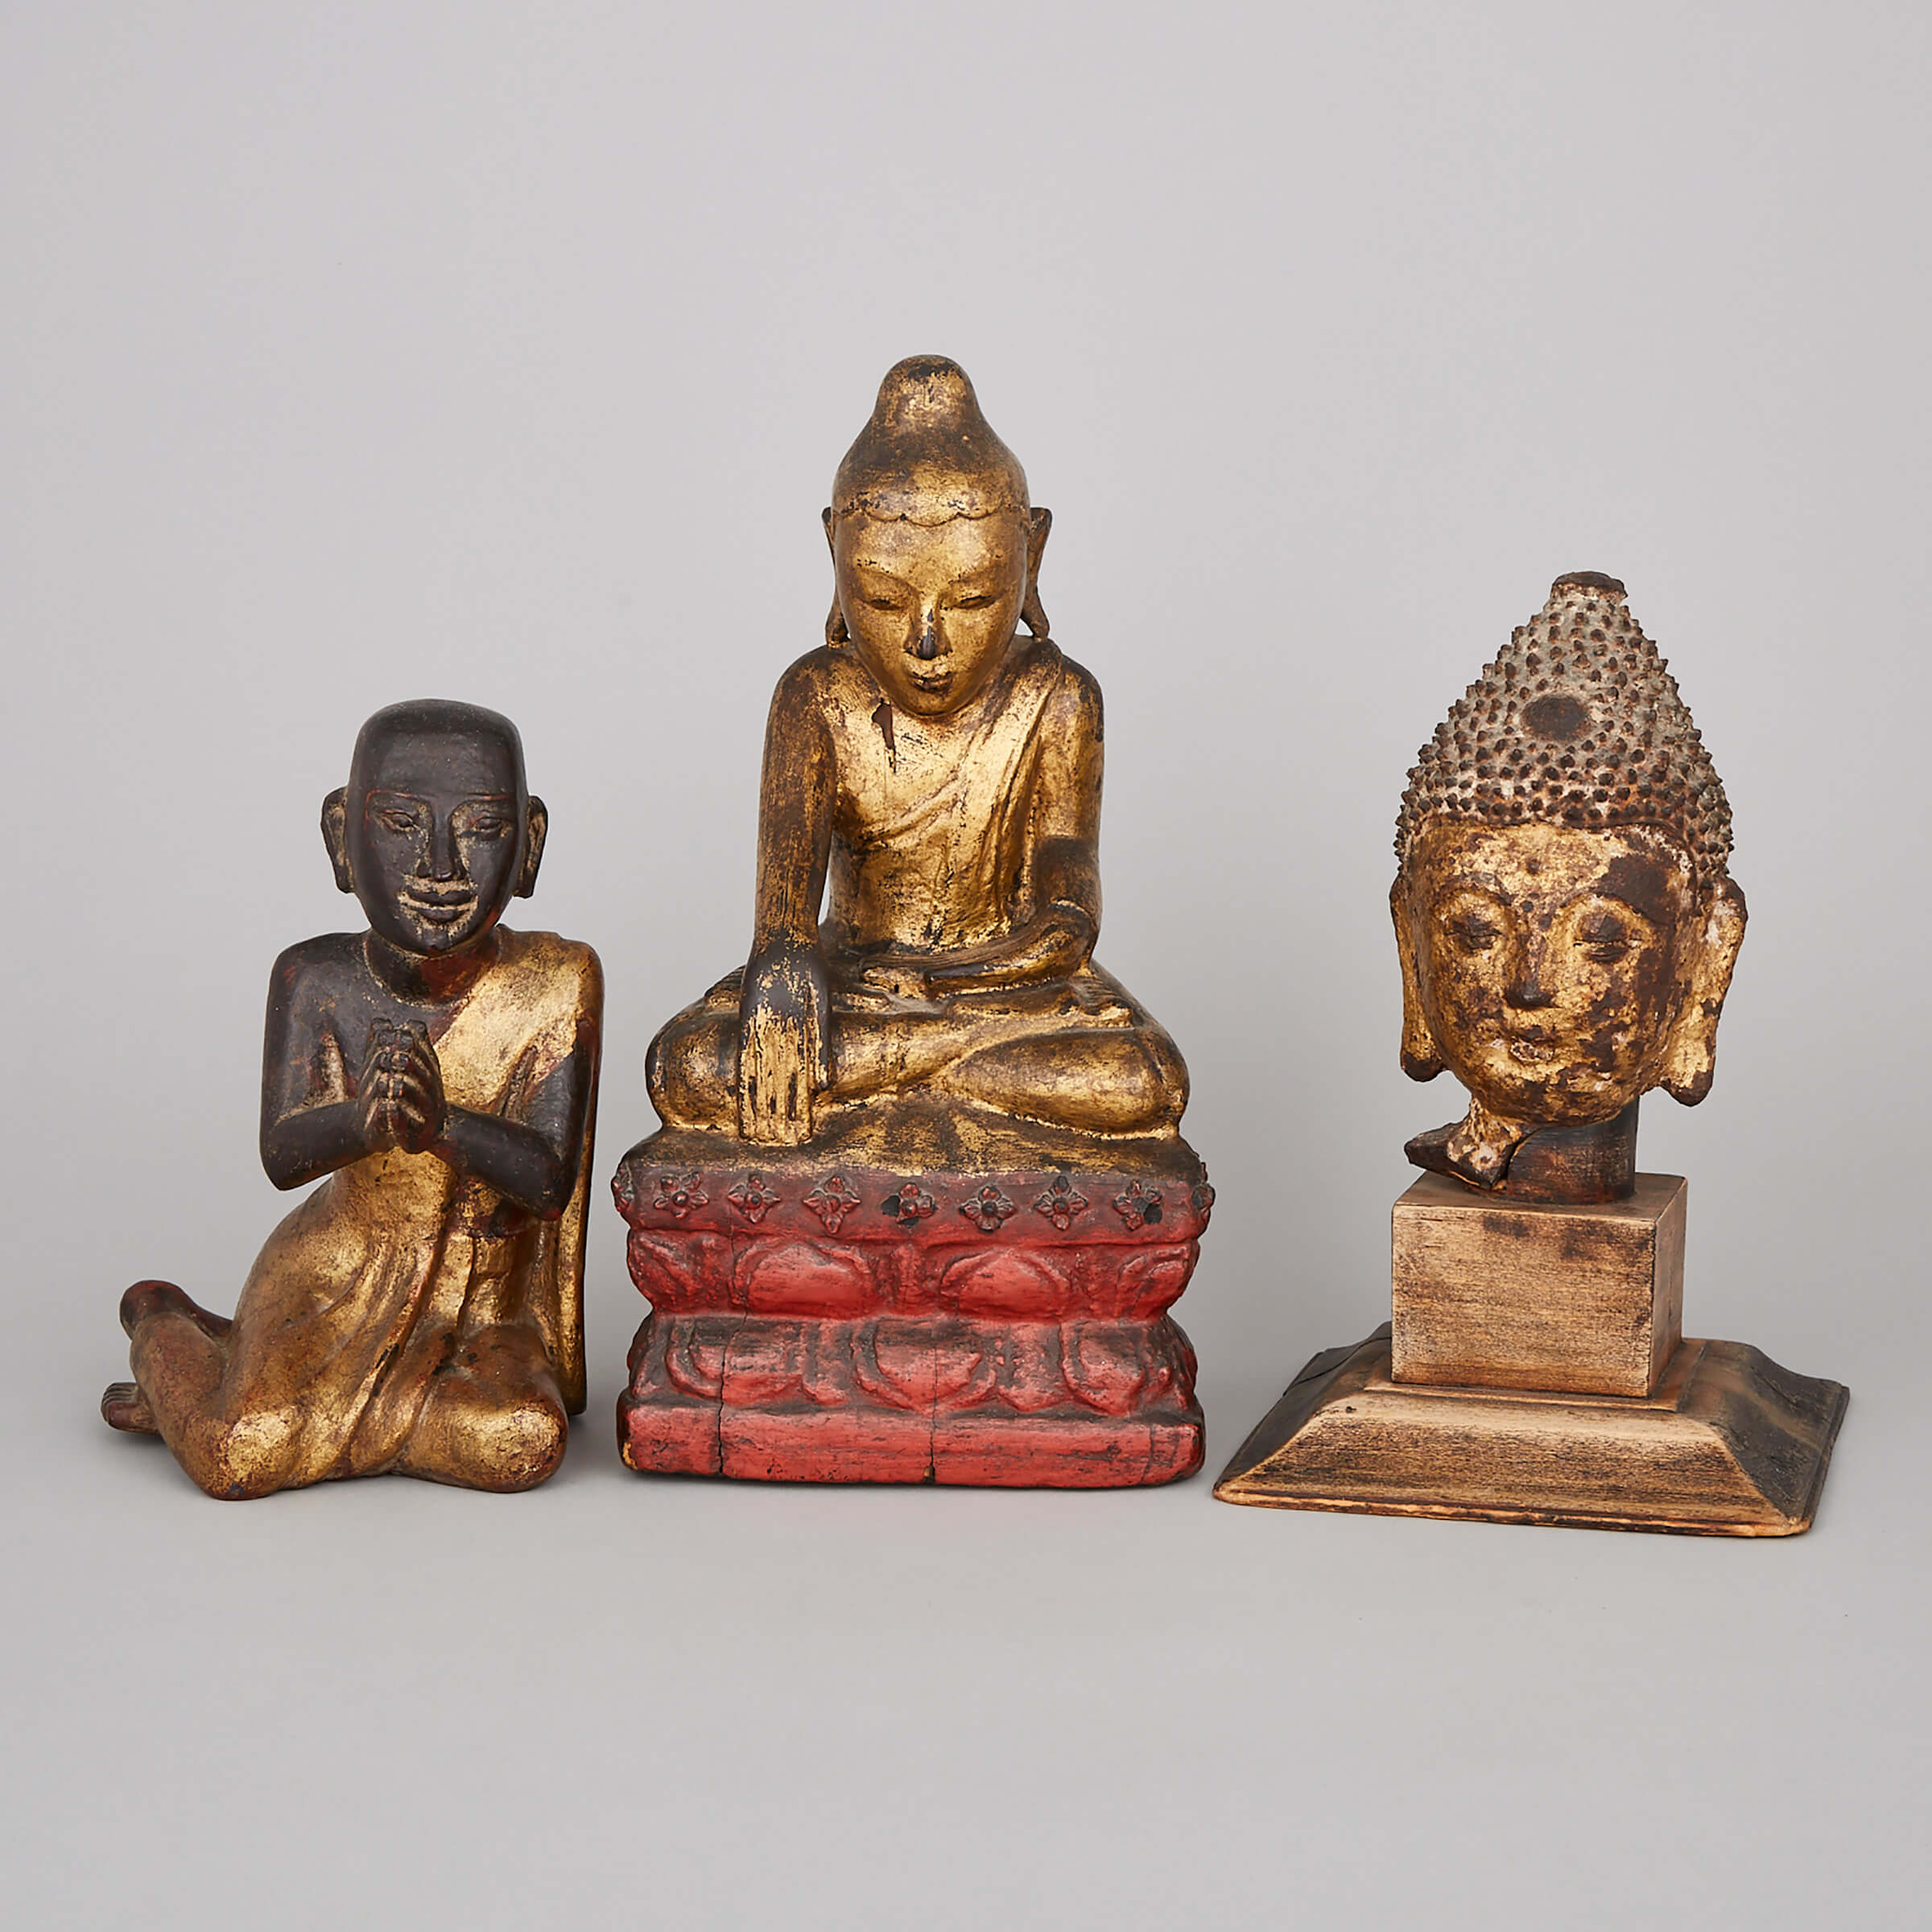 A Group of Three Gilt Southeast Asian Buddhist Figures